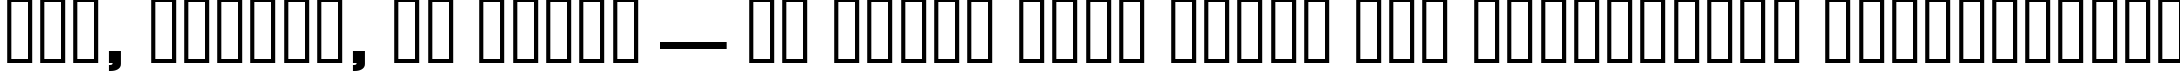 Пример написания шрифтом Square721 Blk Normal текста на украинском